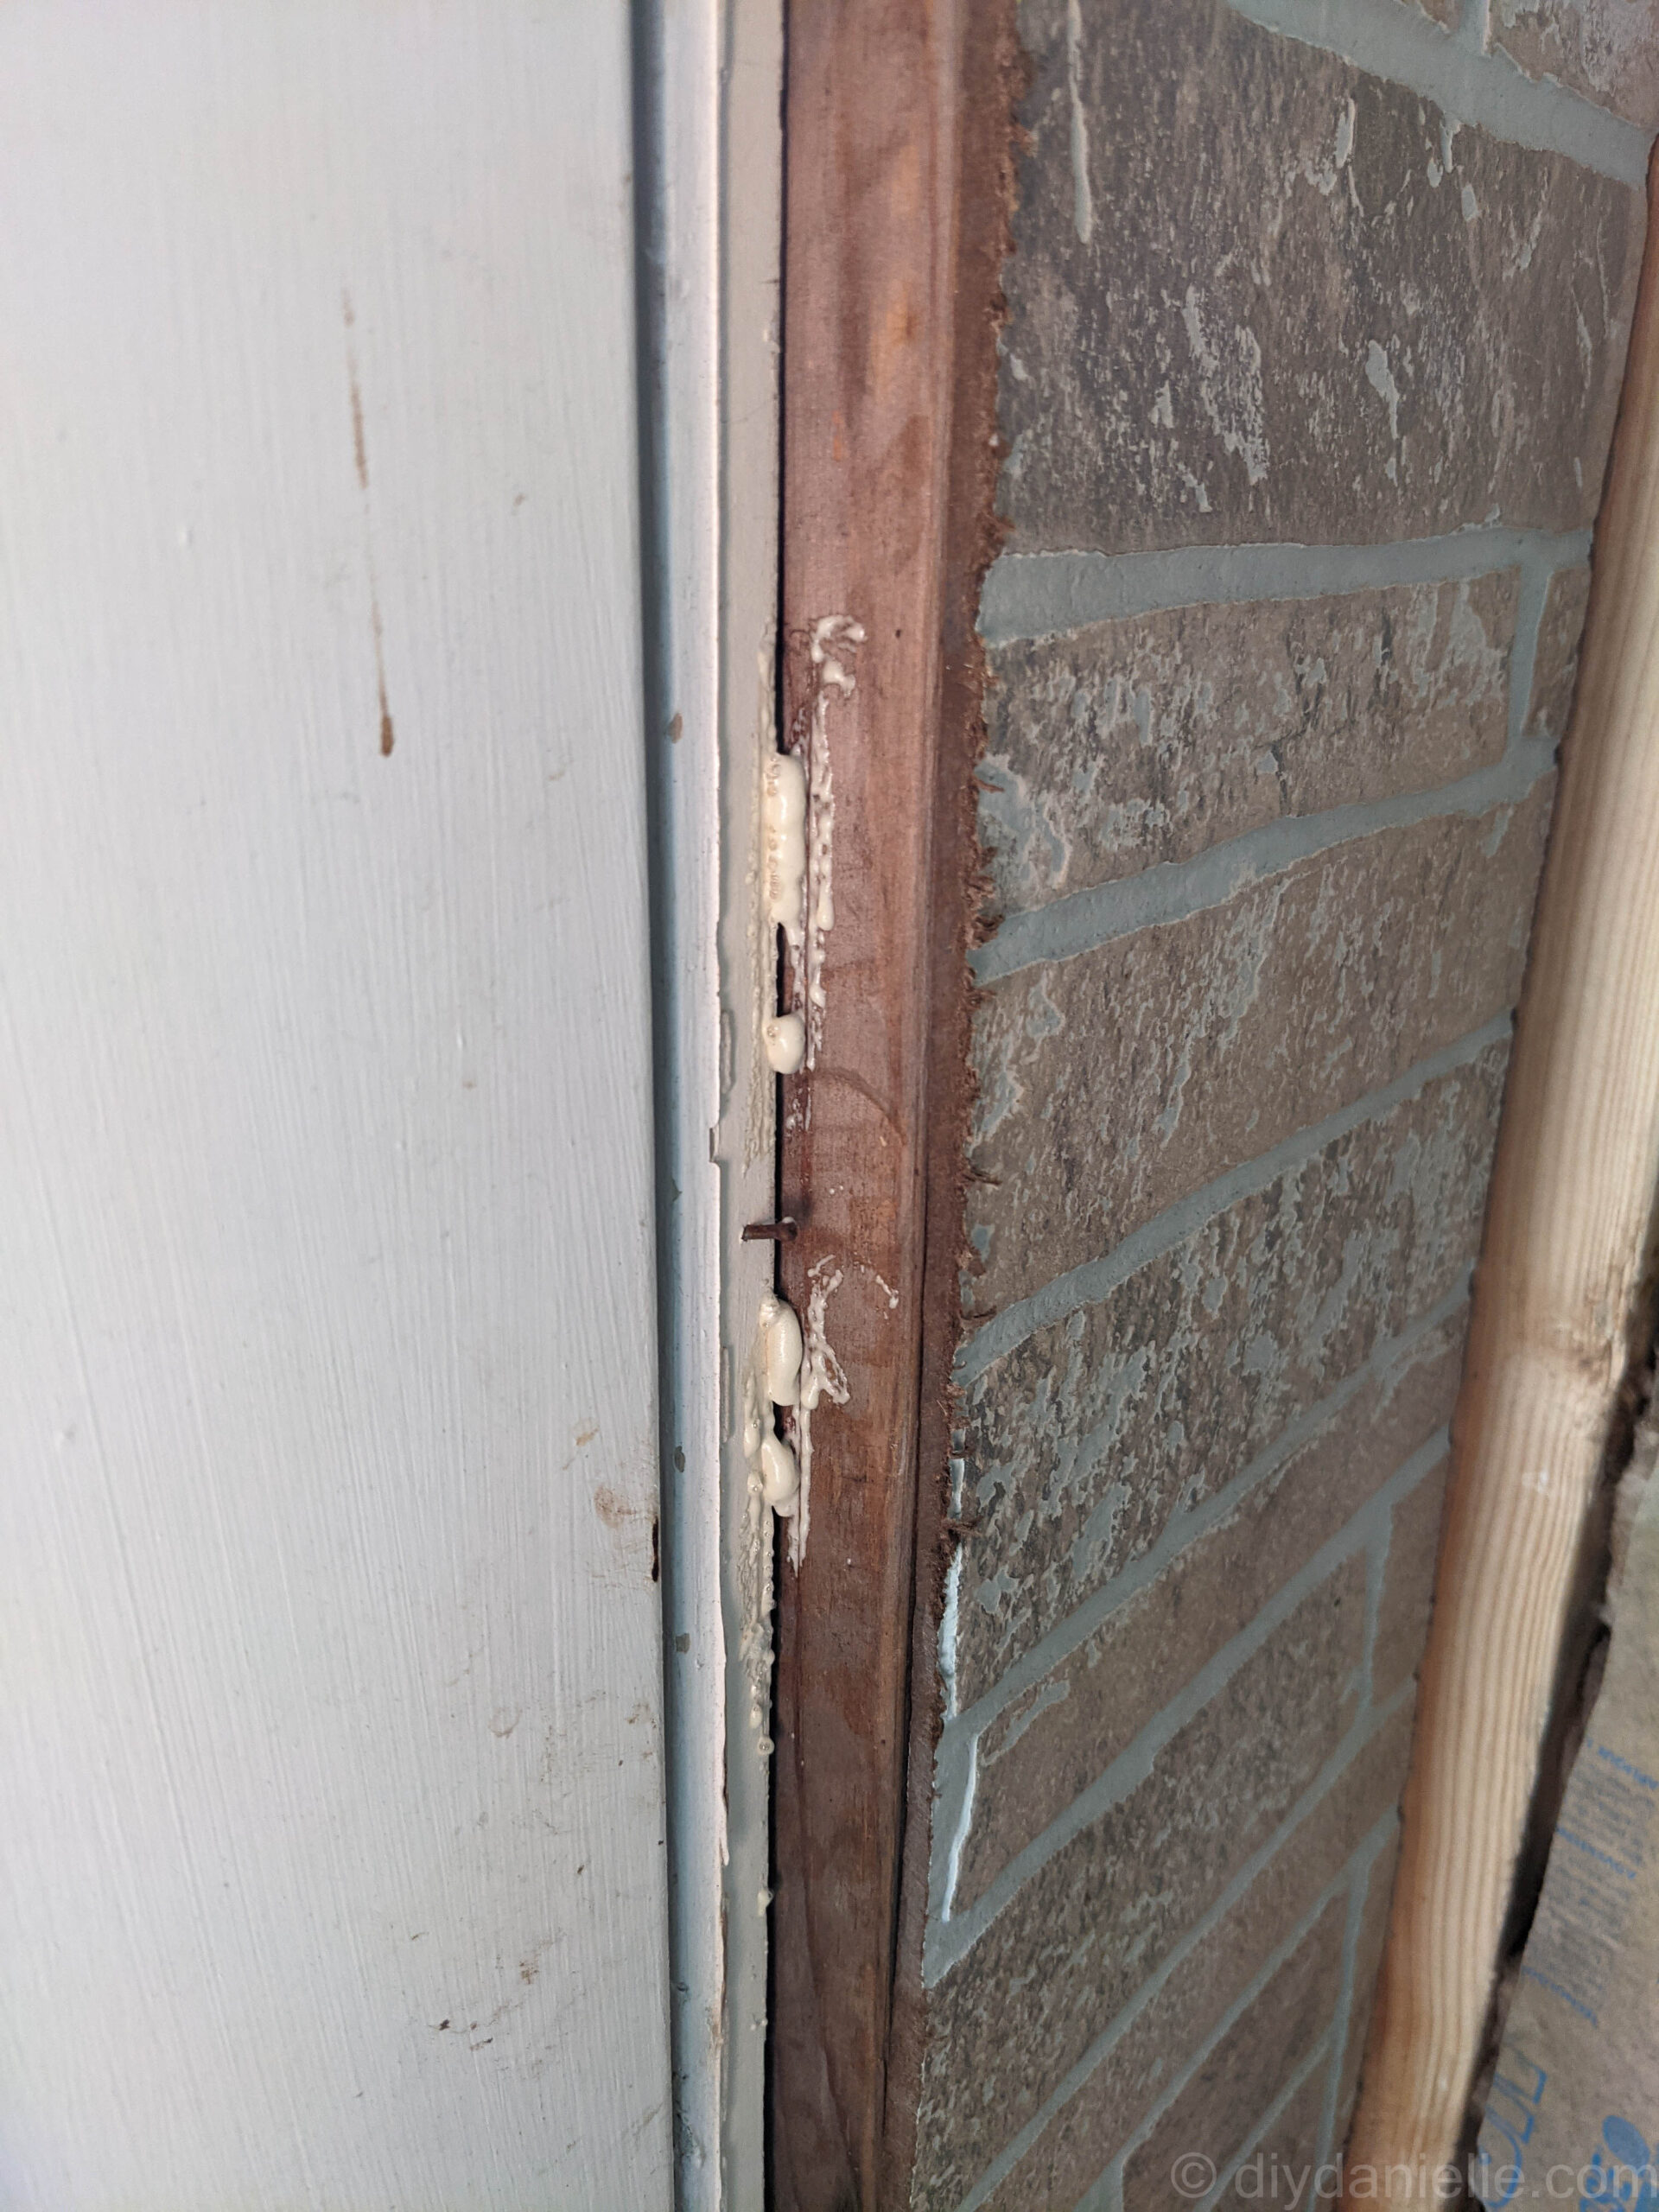 Filling gaps around the door frame with spray foam insulation.